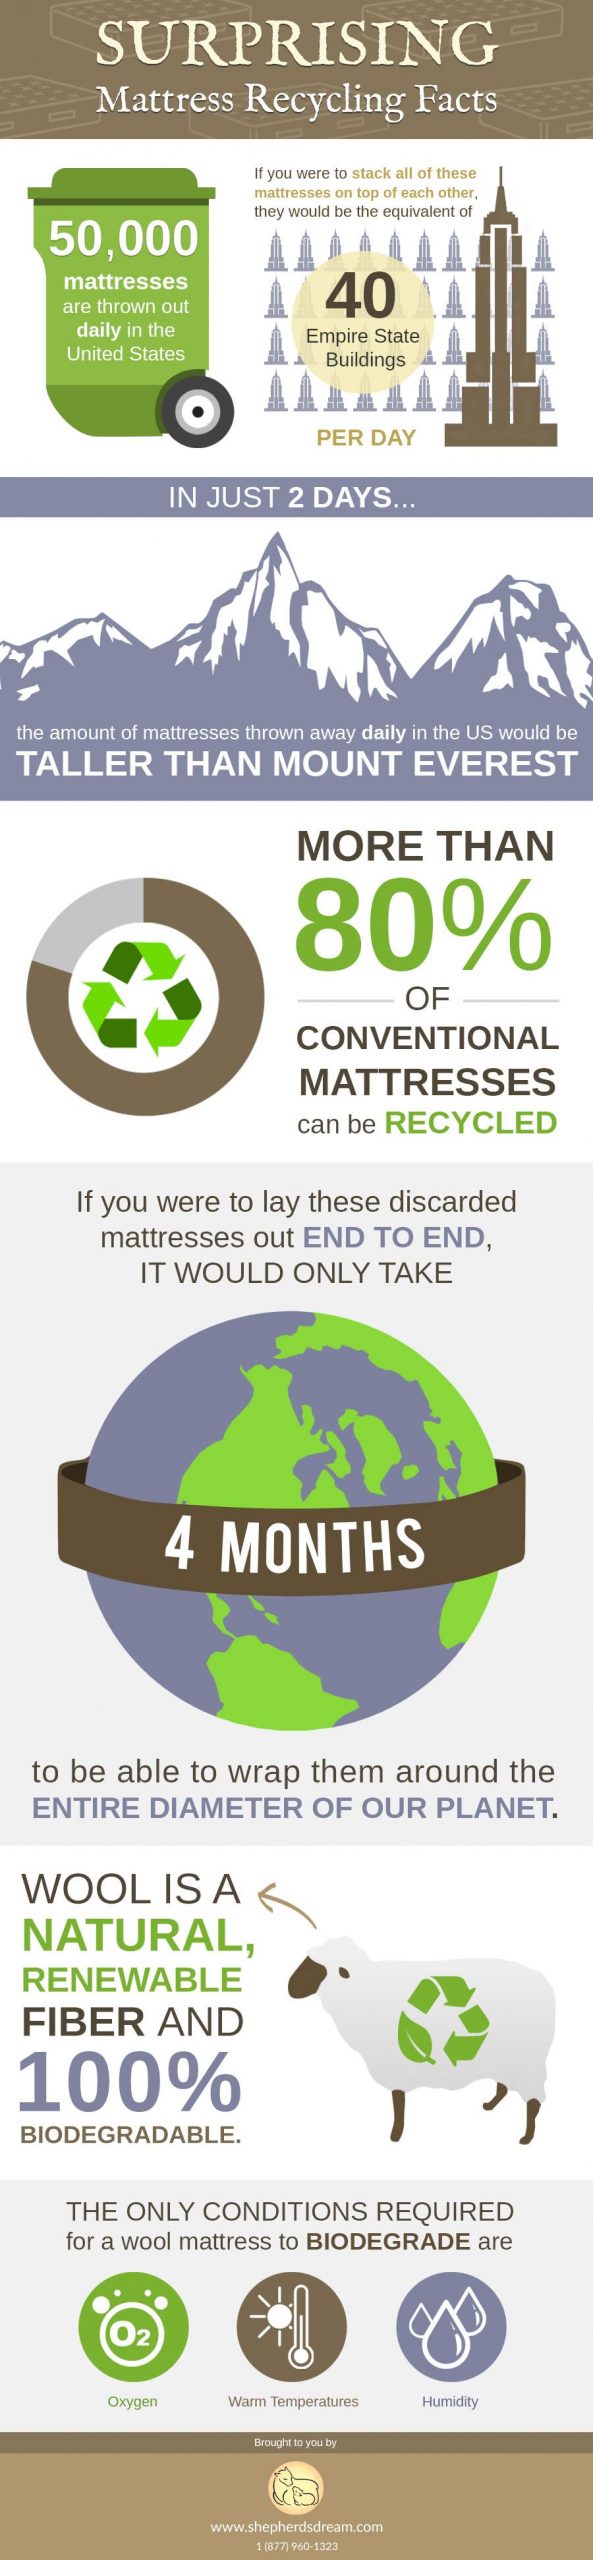 Surprising Mattress Recycling Facts